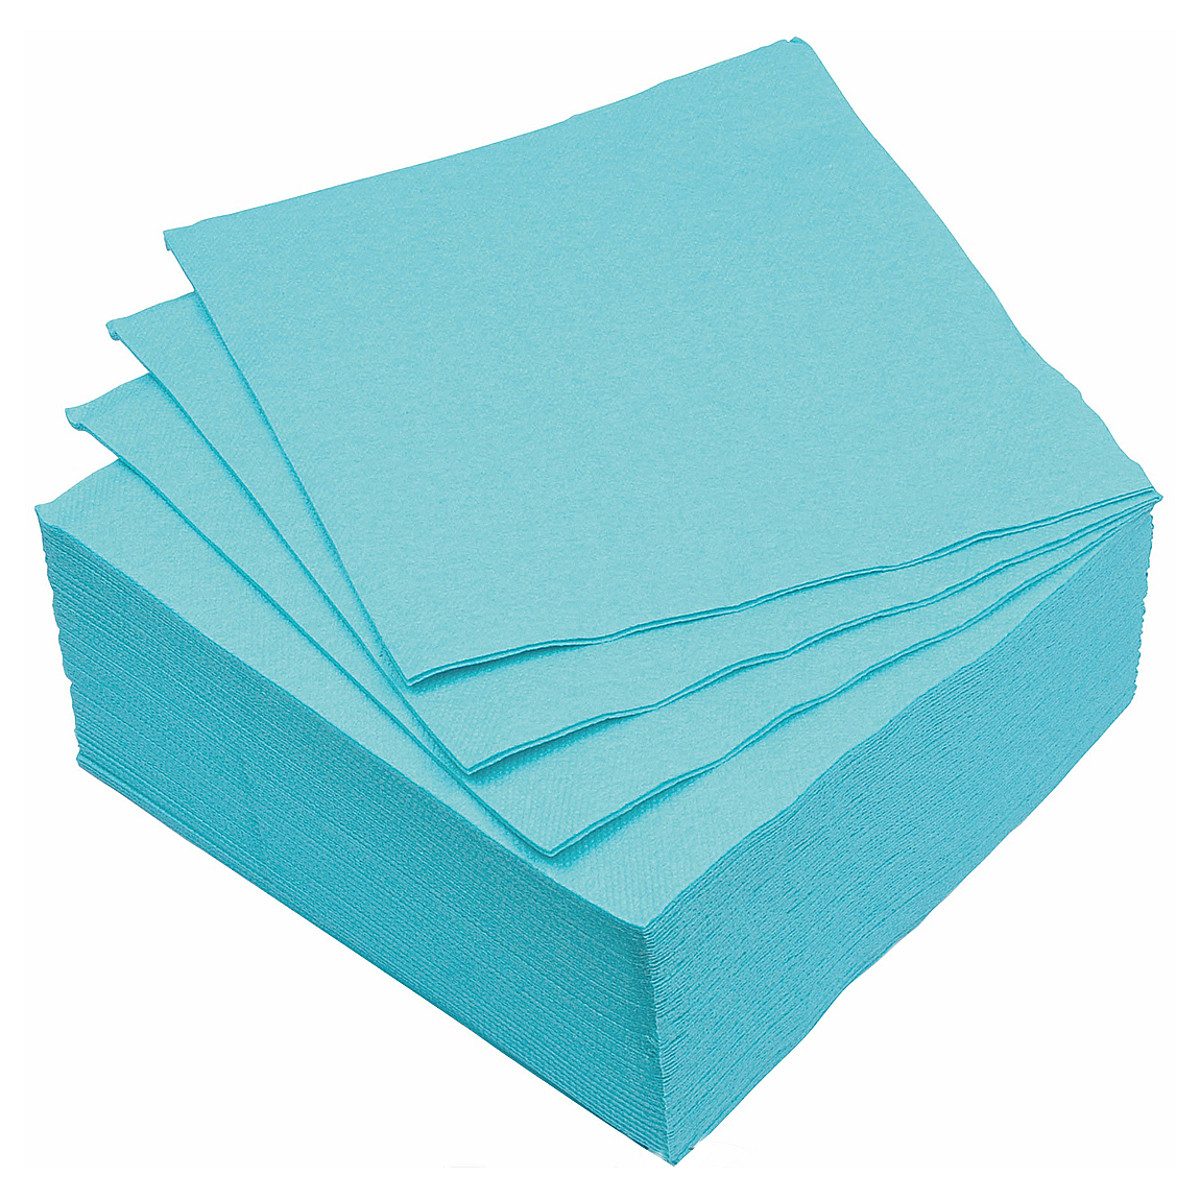 Macosa Home Papierserviette Servietten Set 40 Stk. Blau 38 cm Tisch-Deko Papierservietten, (40 Stk. Tischservietten Mundtuch, Partyservietten Dekoservietten), Papierservietten Einweg-Servietten Papier